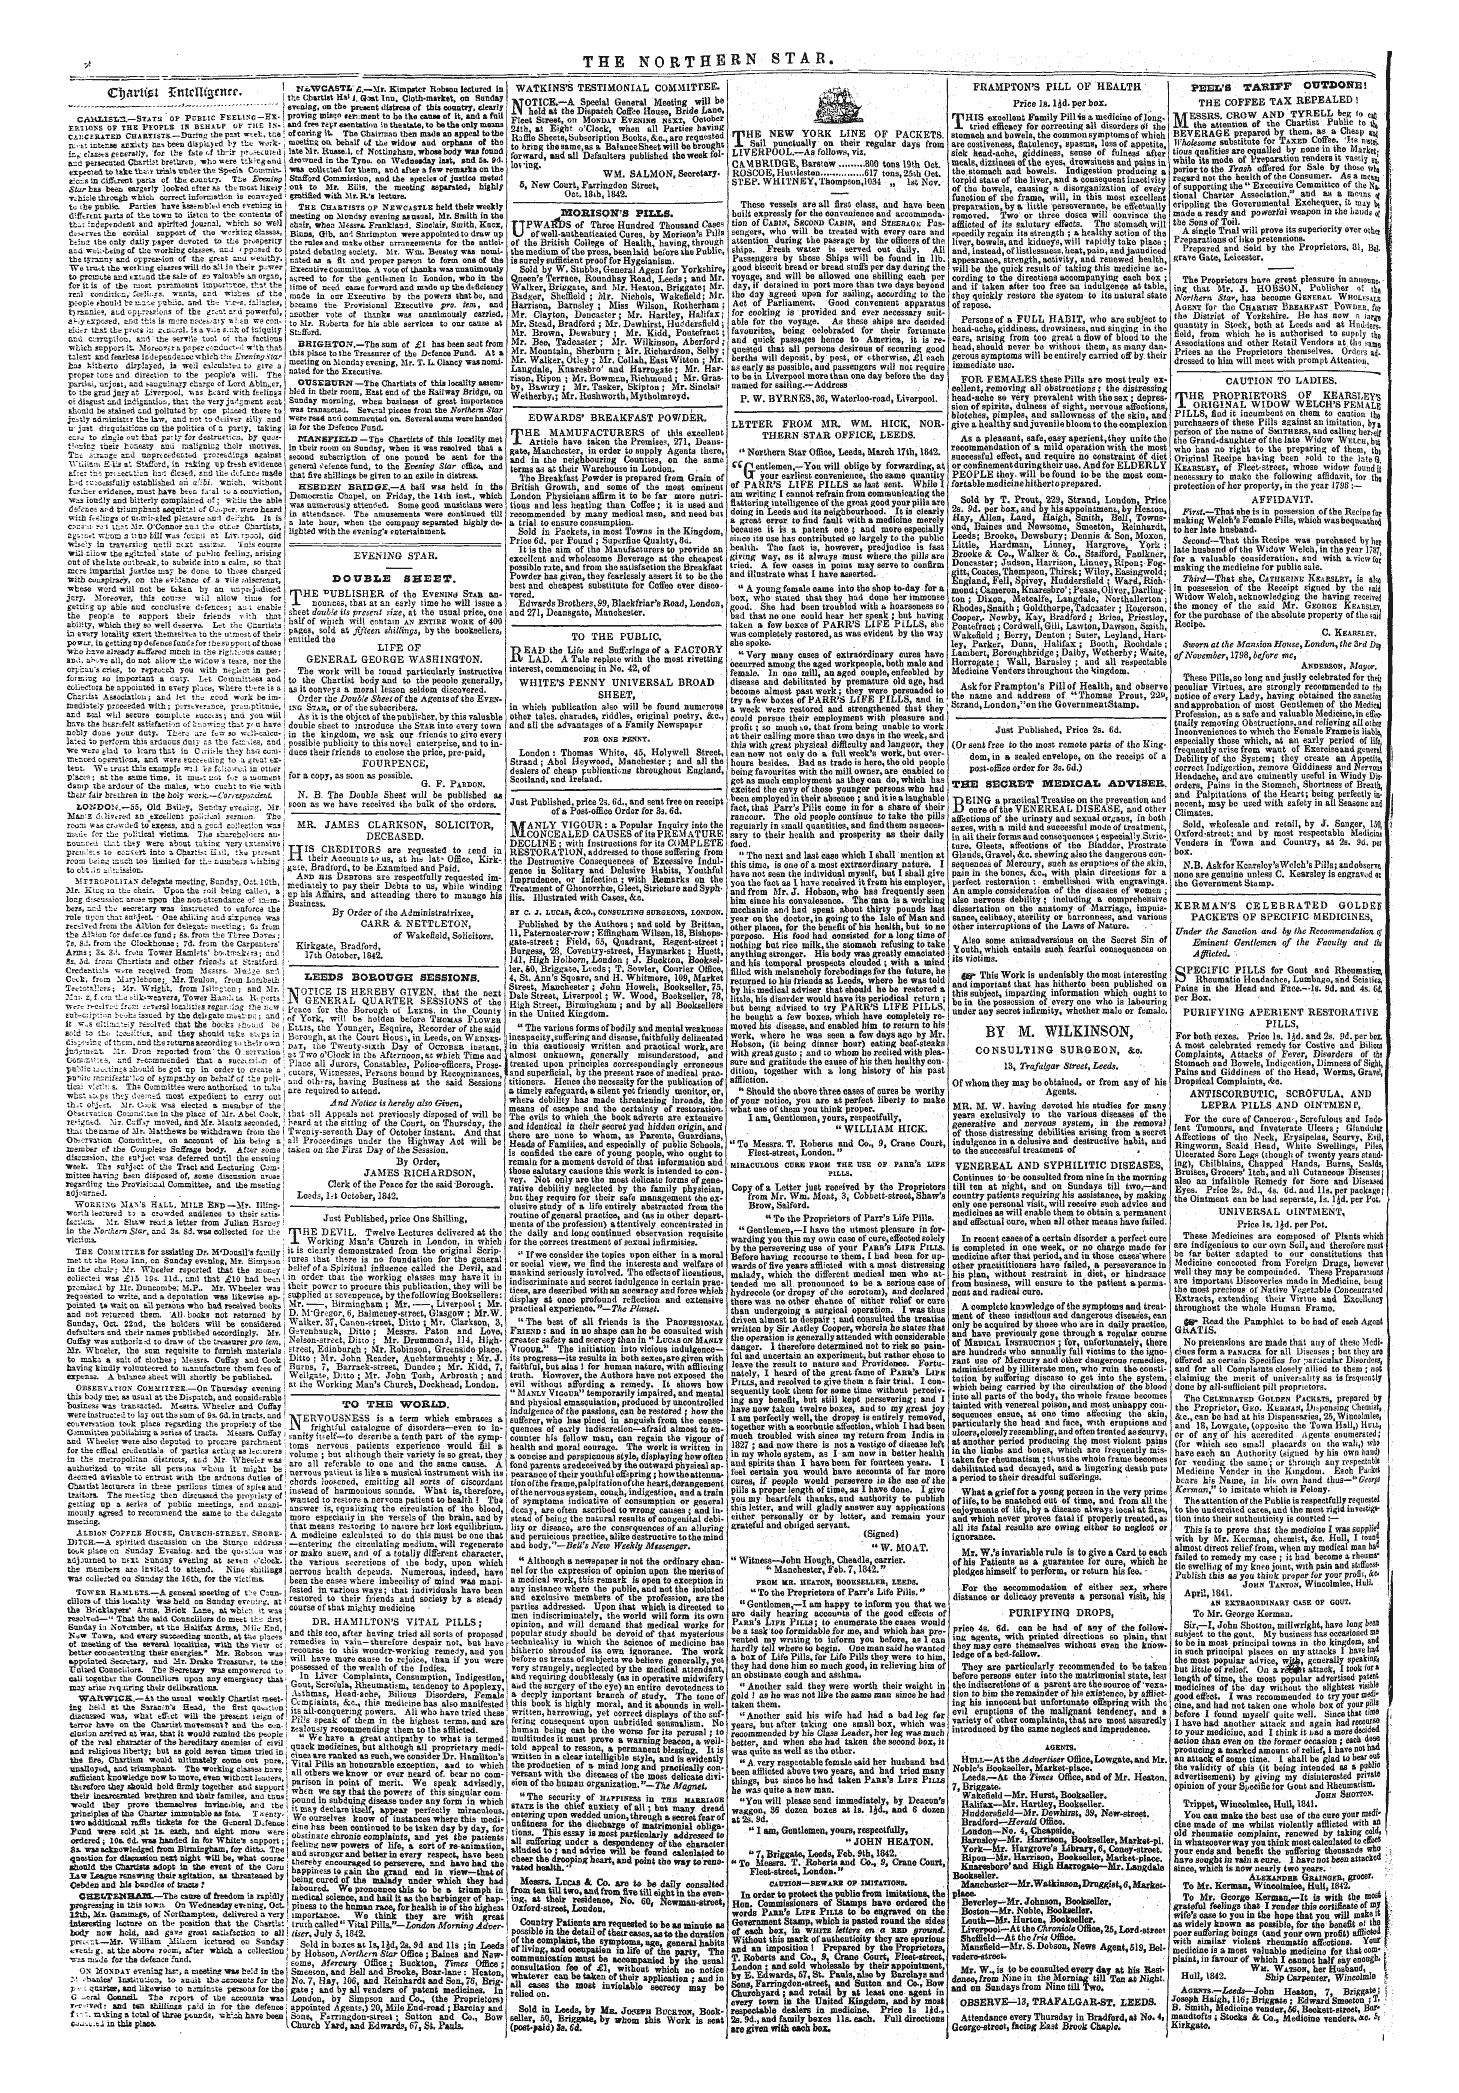 Northern Star (1837-1852): jS F Y, 3rd edition - Evening Star.